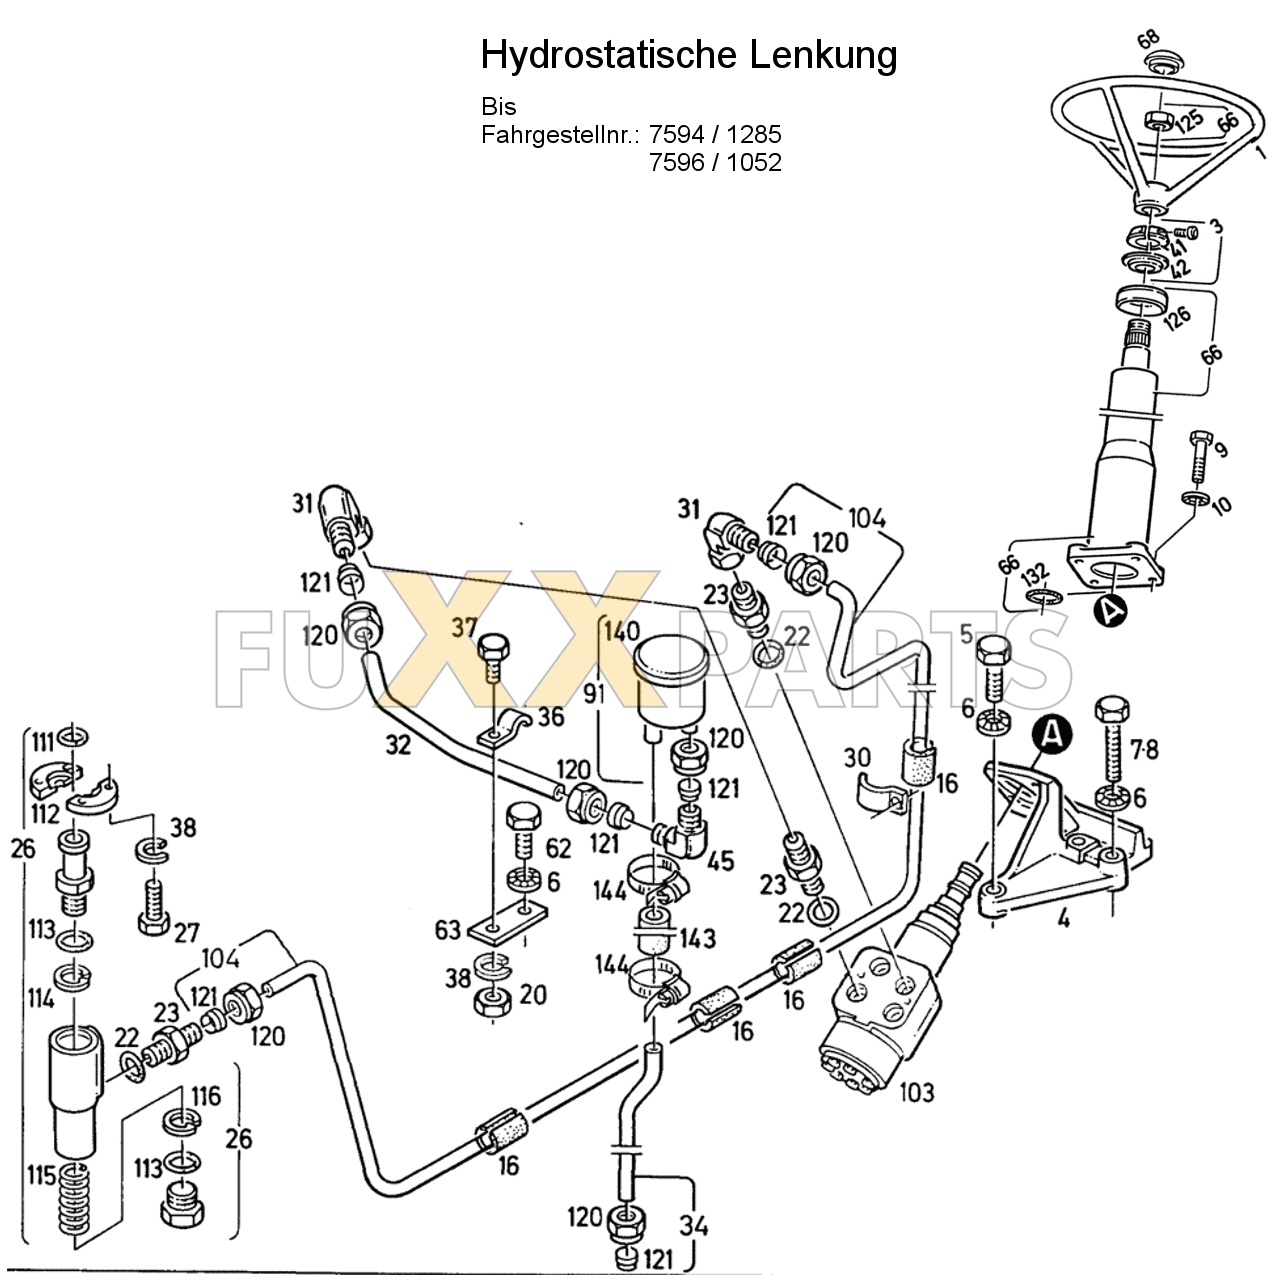 D 7807 Hydrostatische Lenkung 1.1